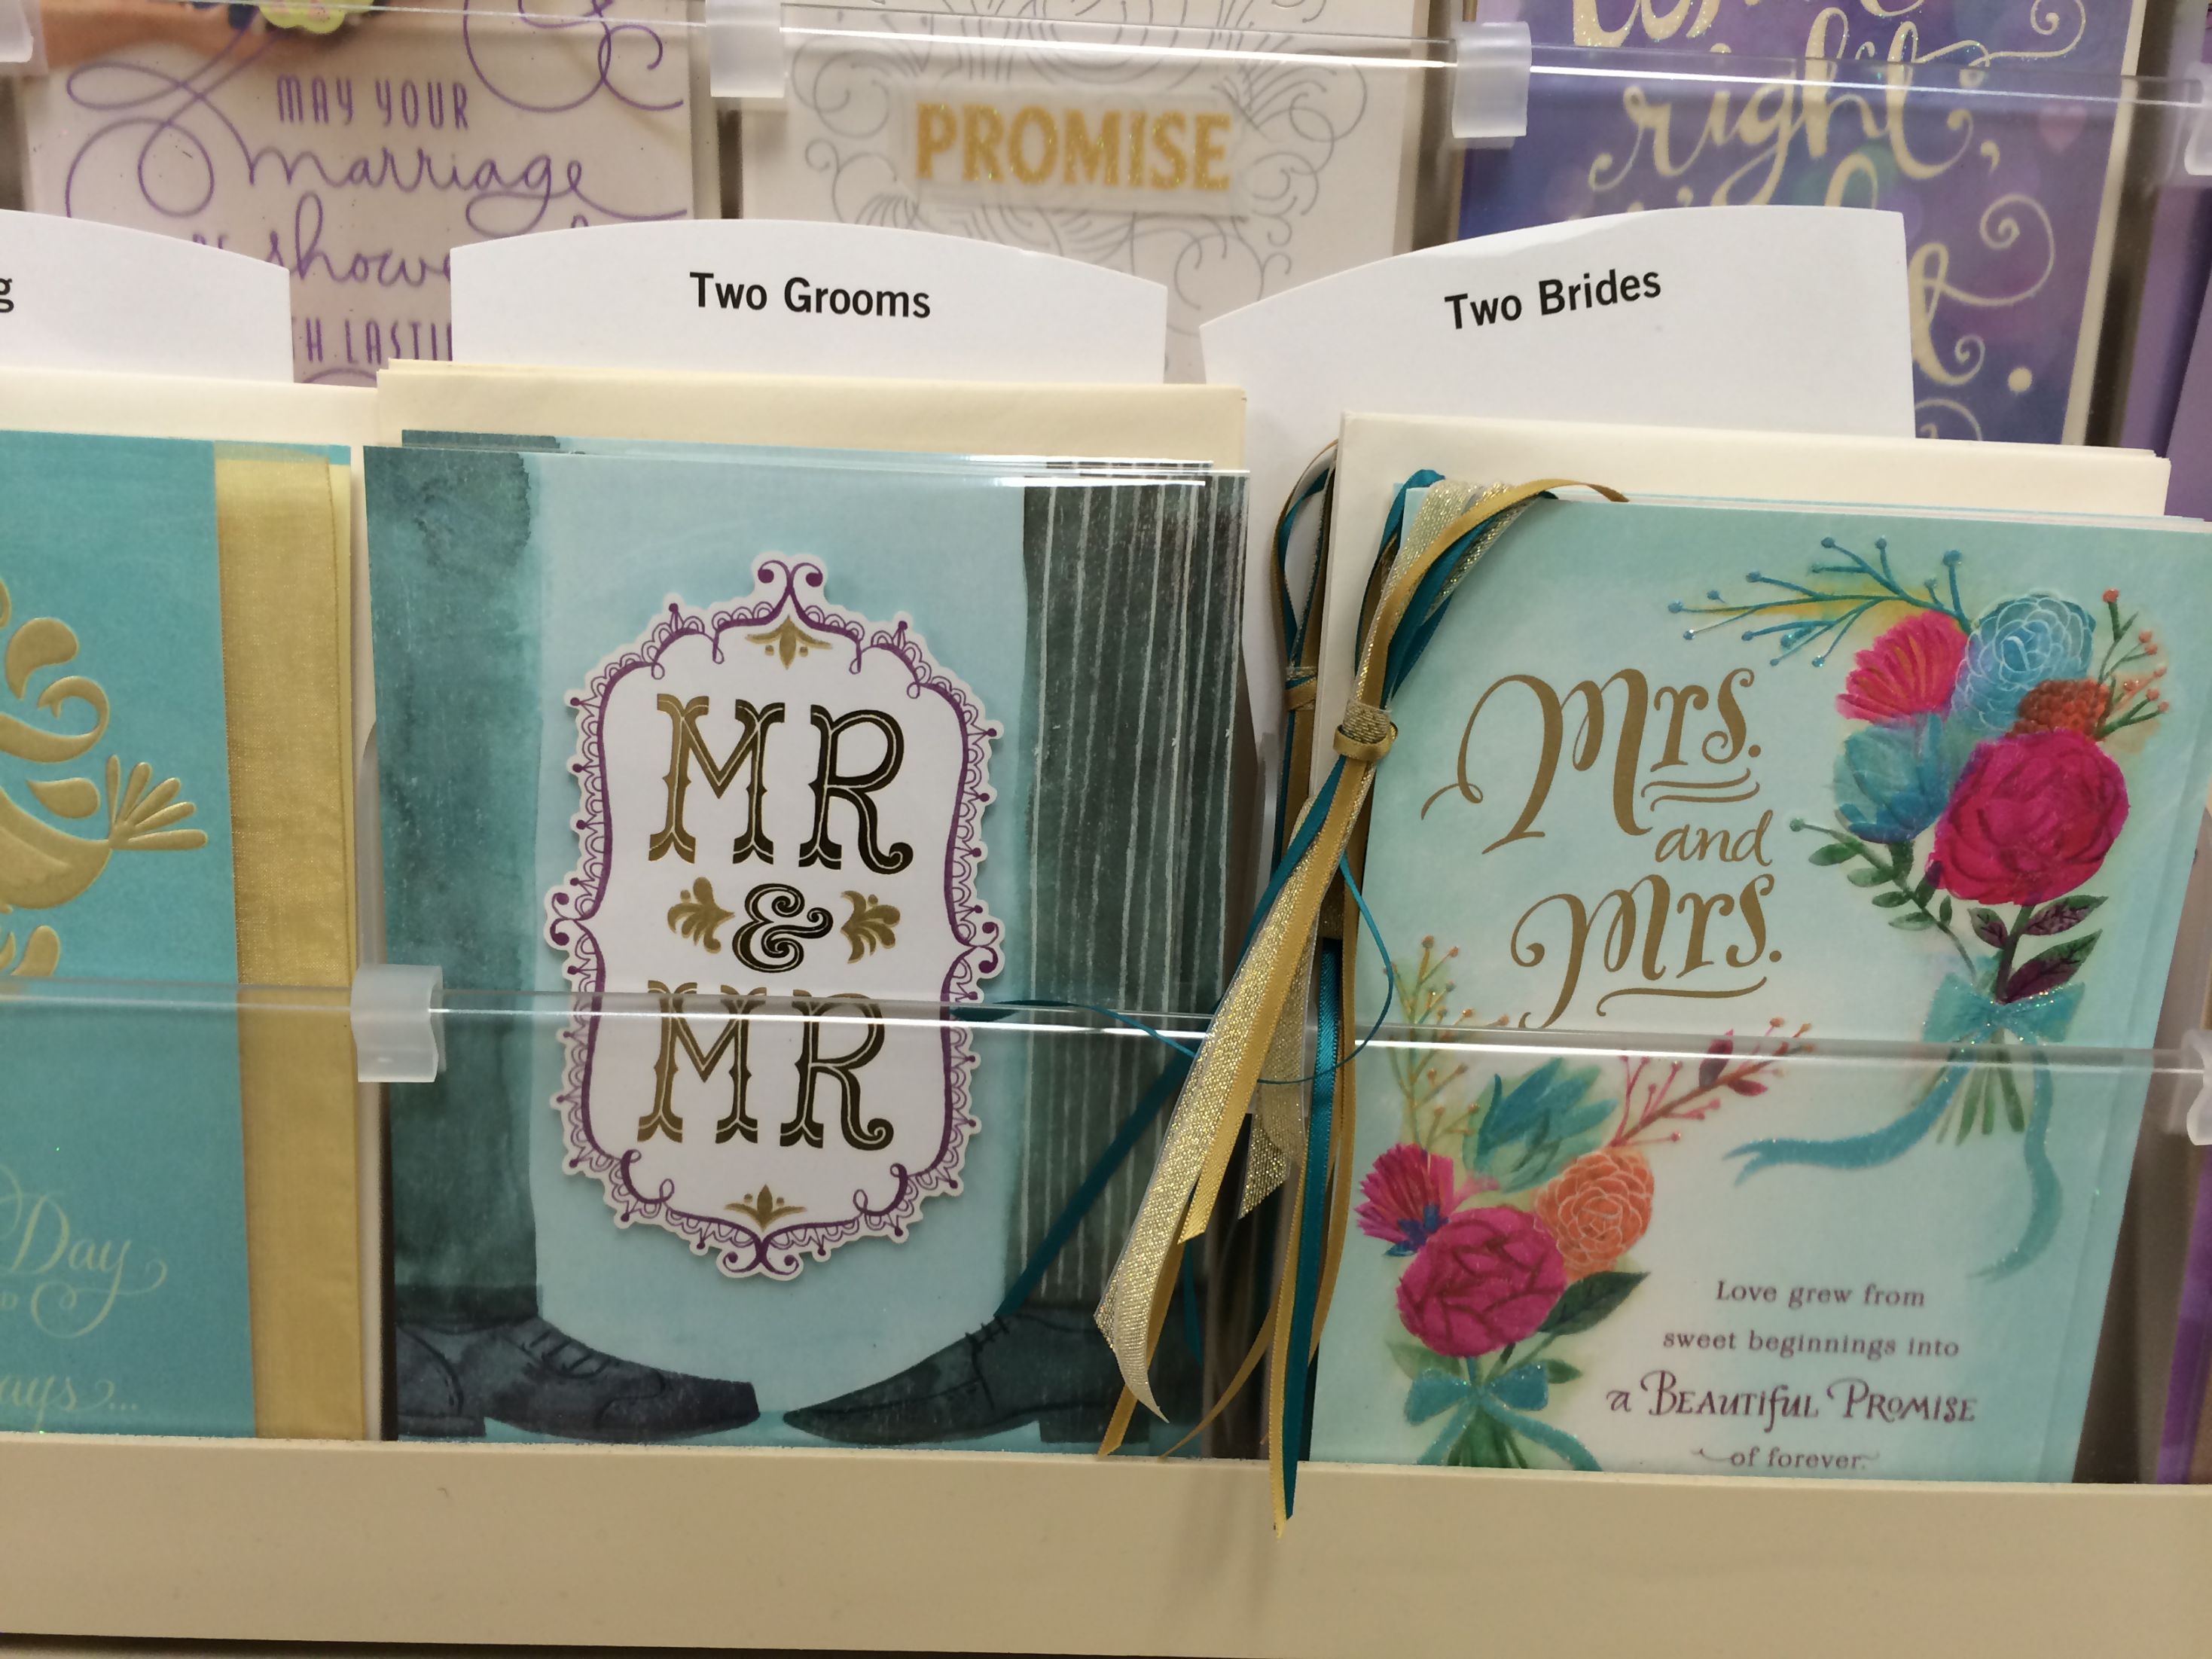 Brigham Young University Bookstore Accidentally Stocks Greeting Cards Celebrating Same-Sex Weddings